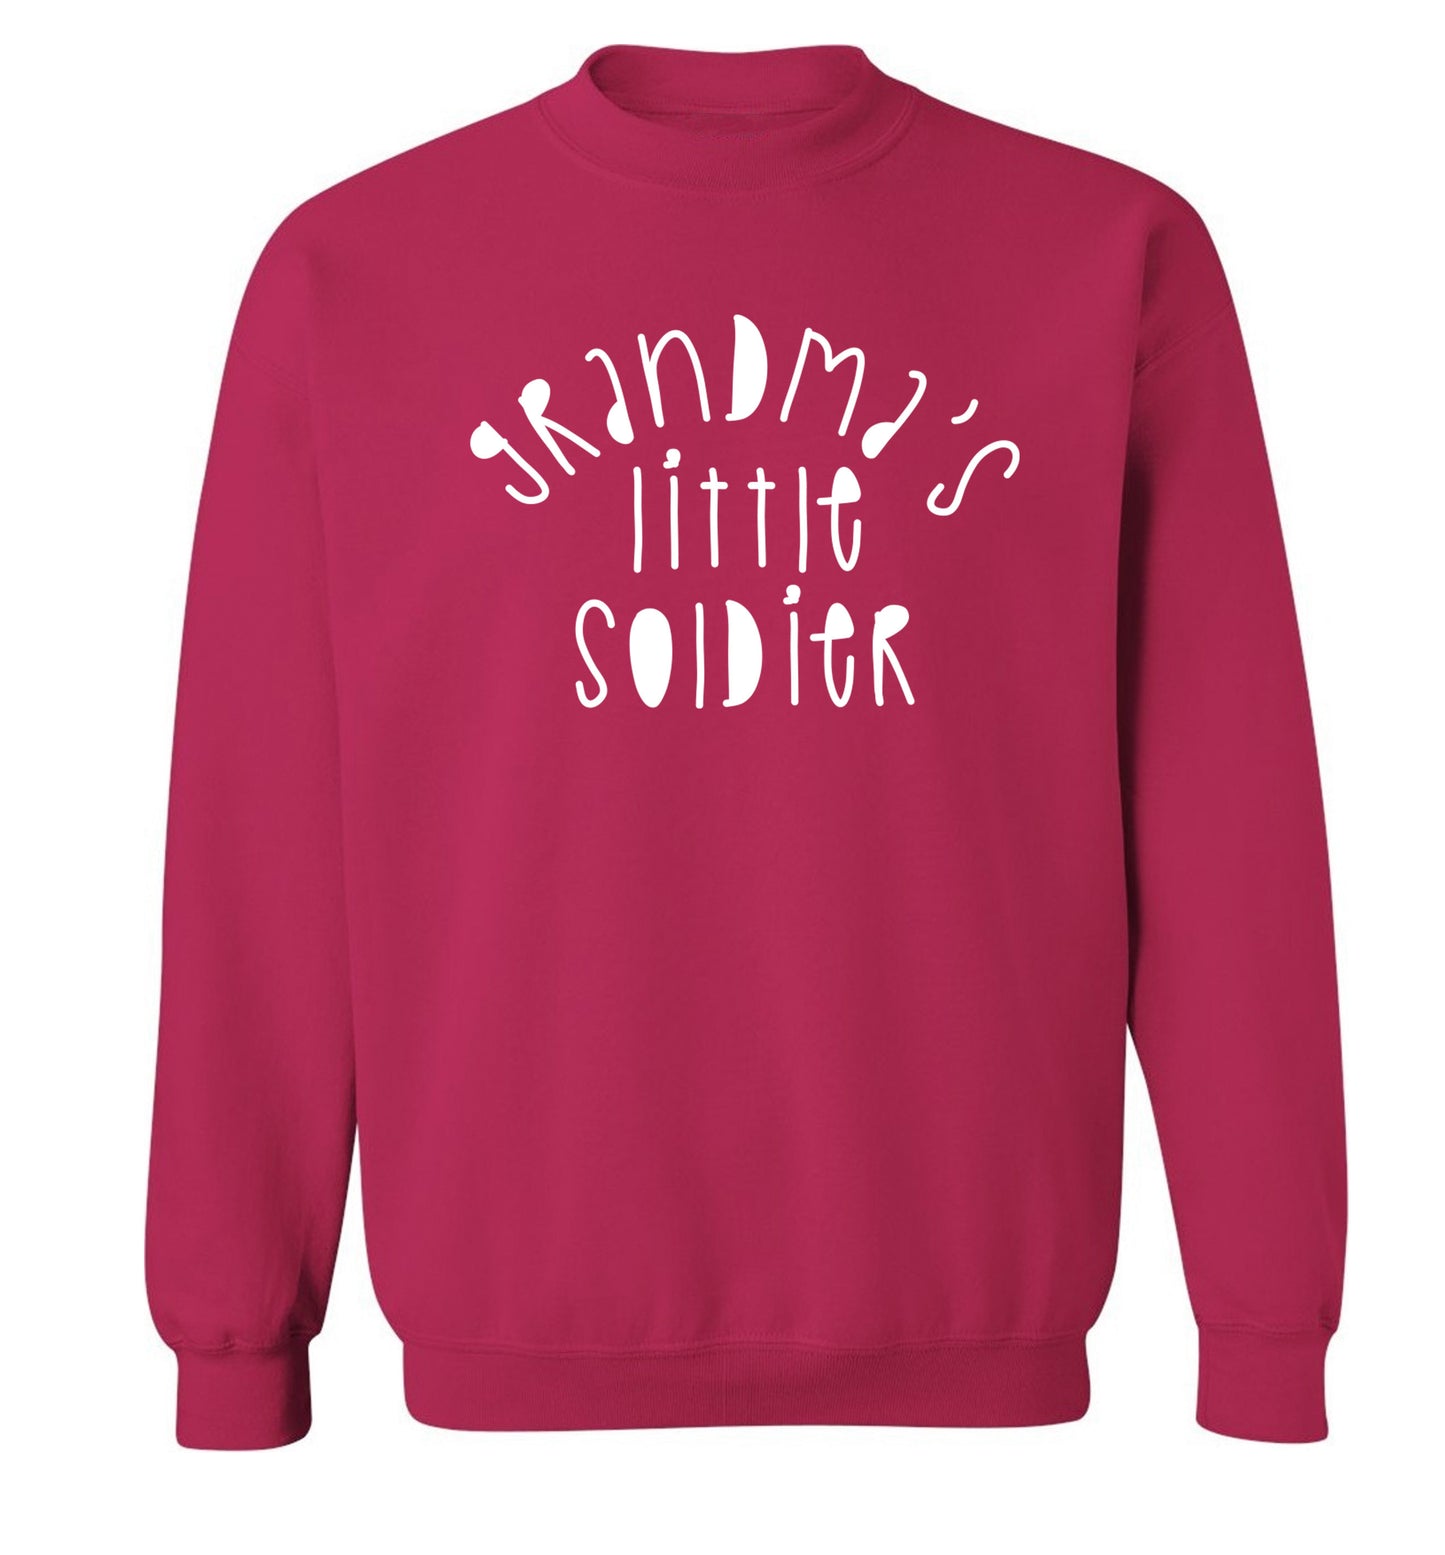 Grandma's little soldier Adult's unisex pink Sweater 2XL